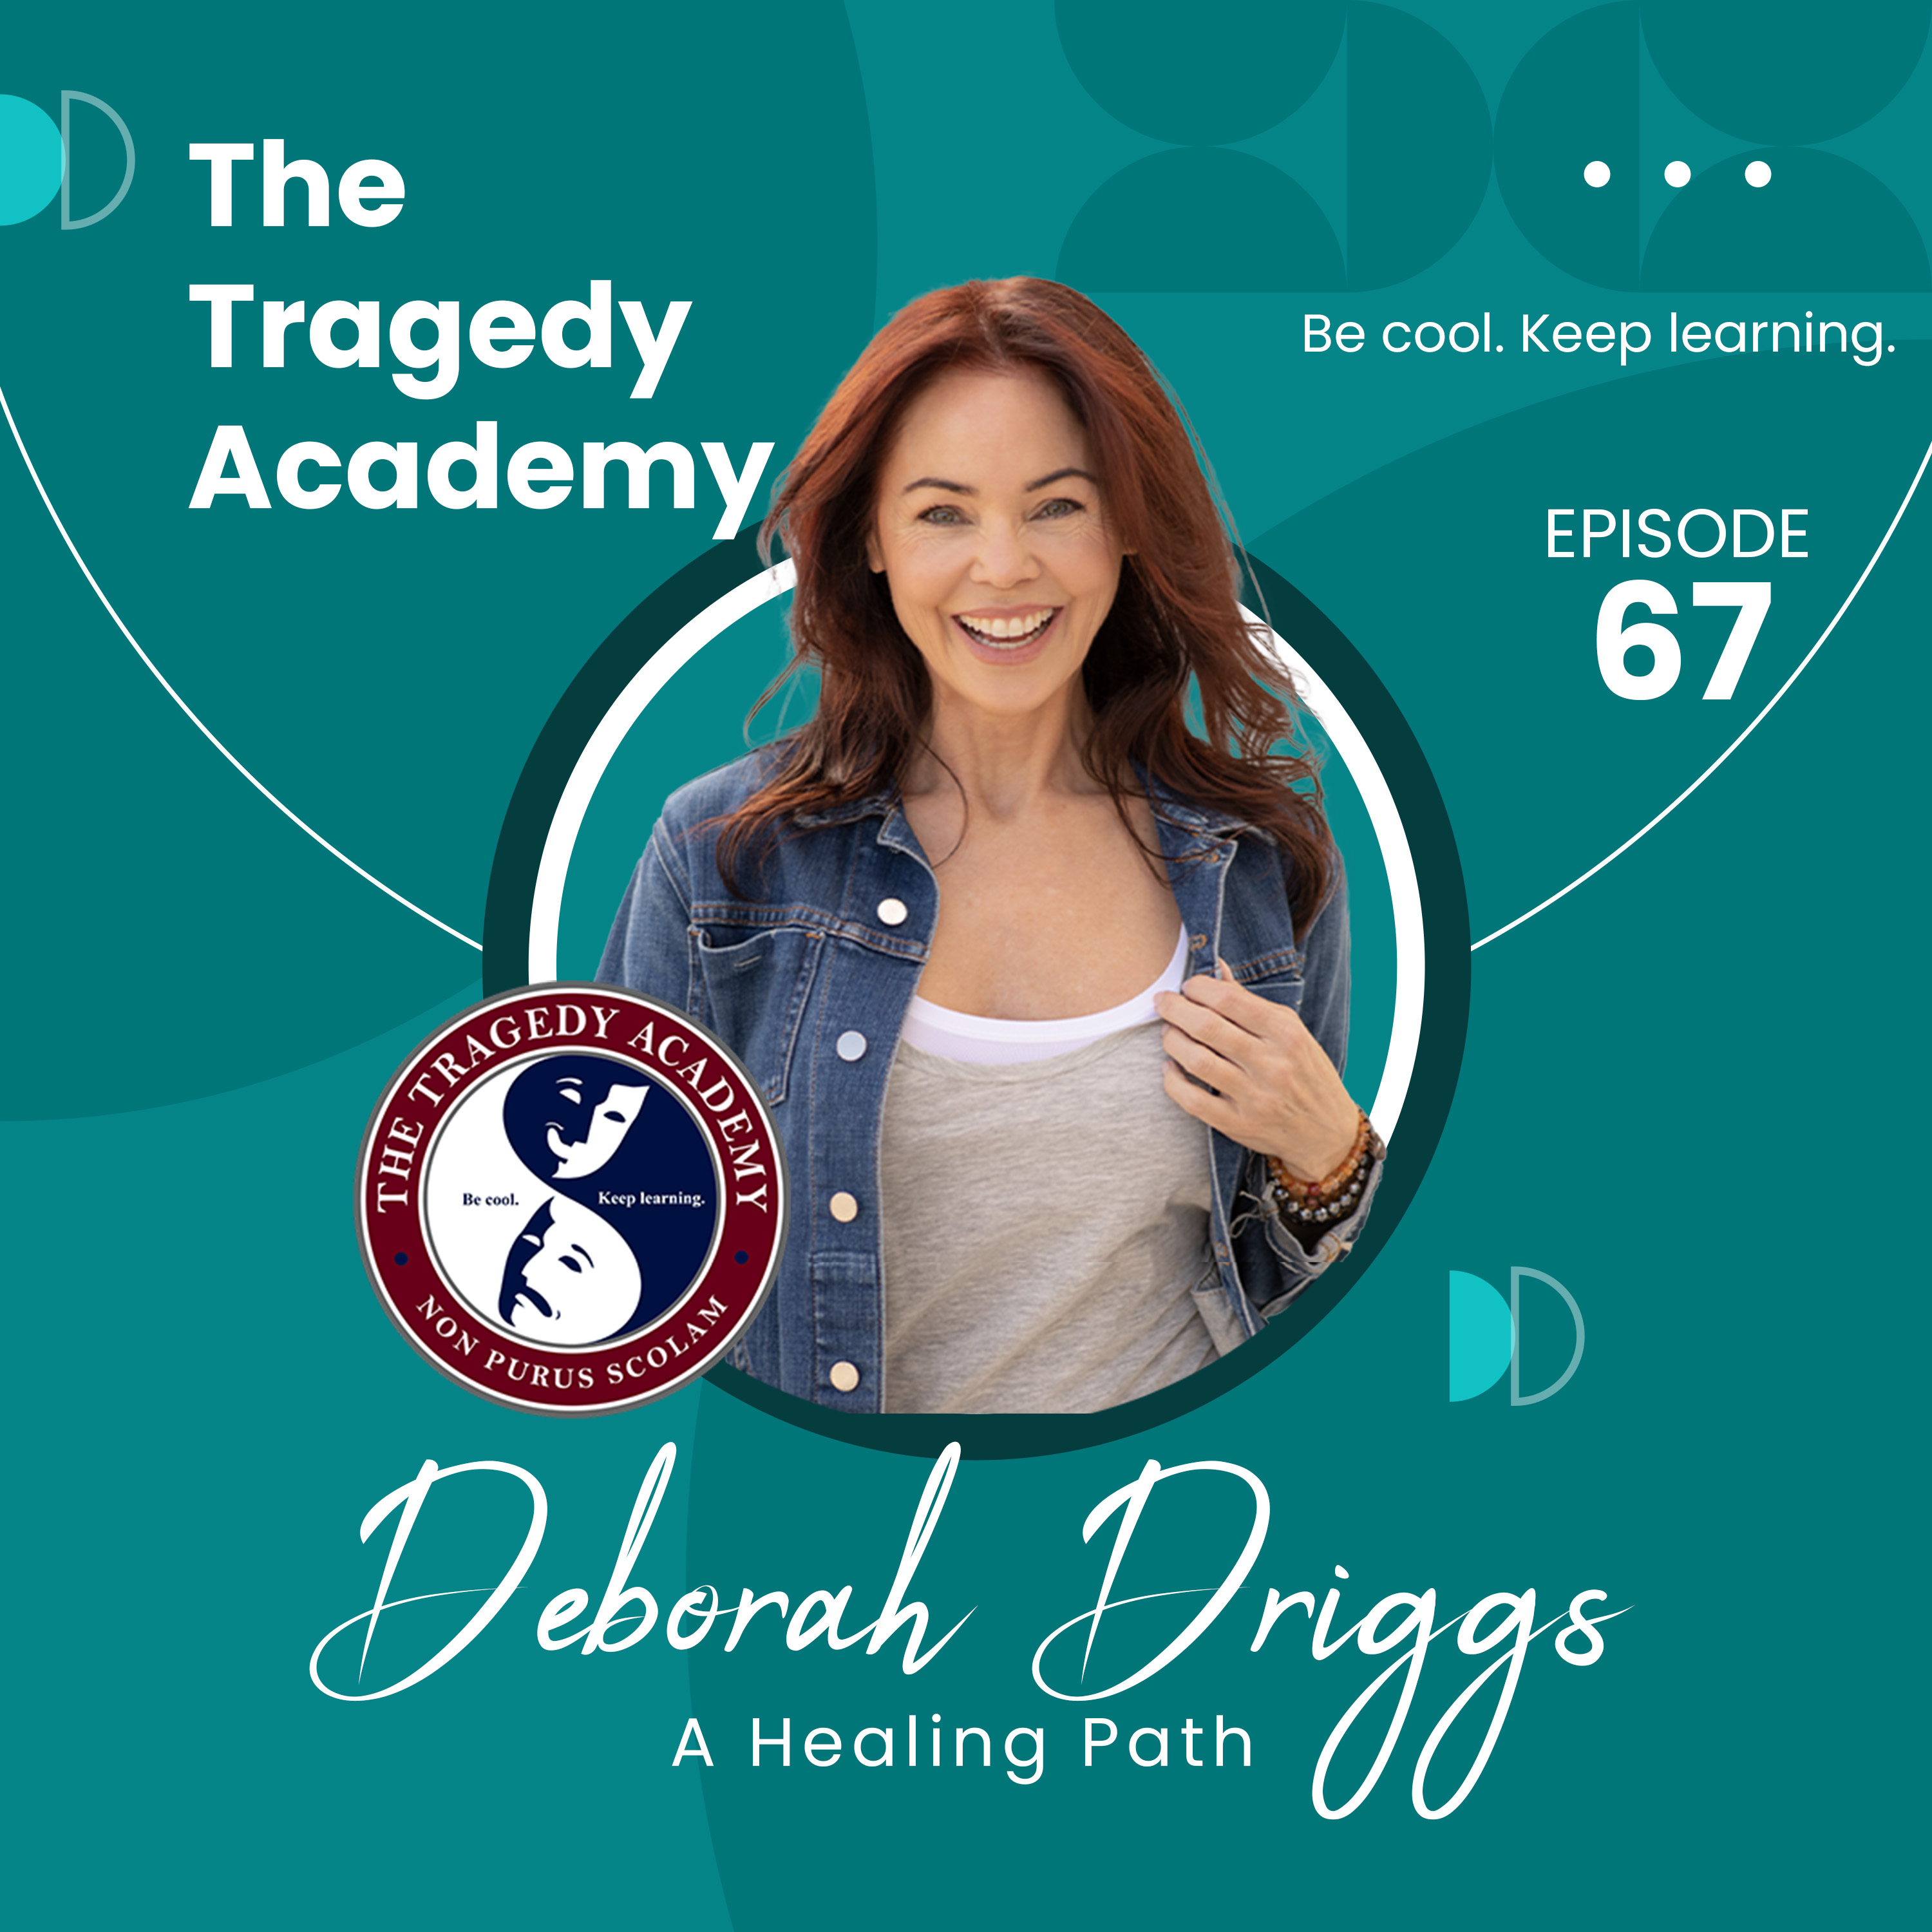 Deborah Driggs - A Healing Path Image